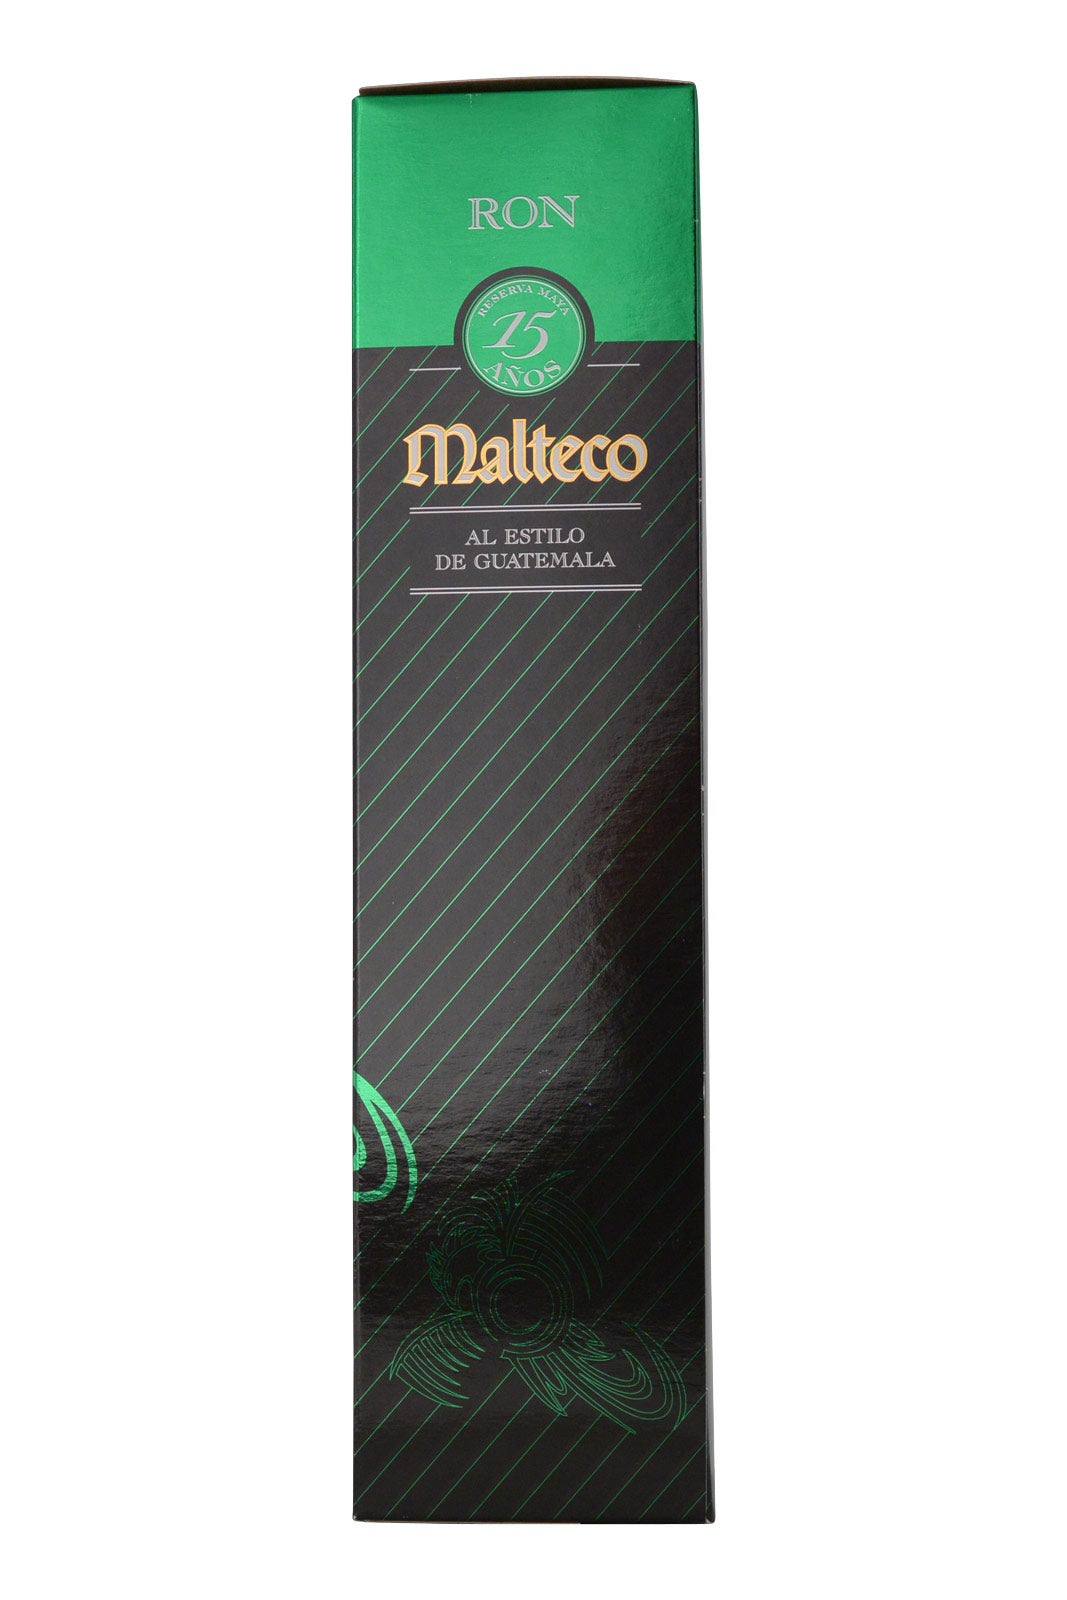 Malteco 15 Year Old